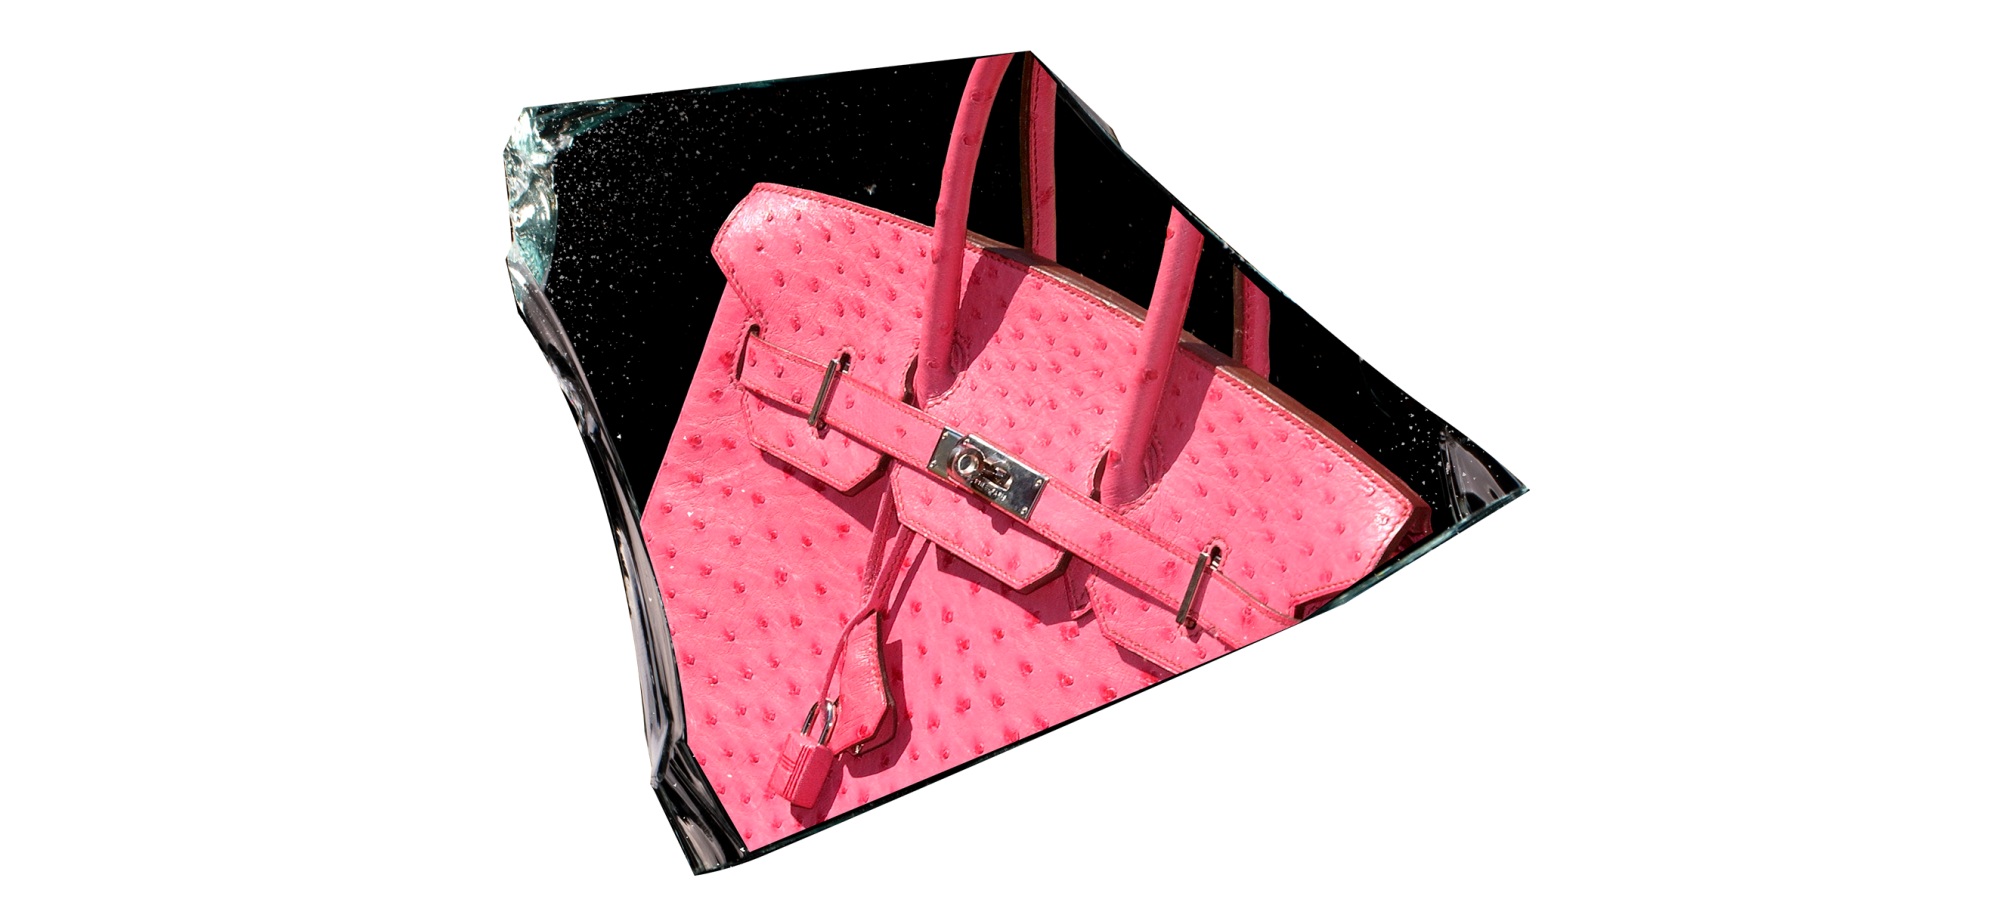 A pink Birkin bag superimposed onto a dark shard of glass